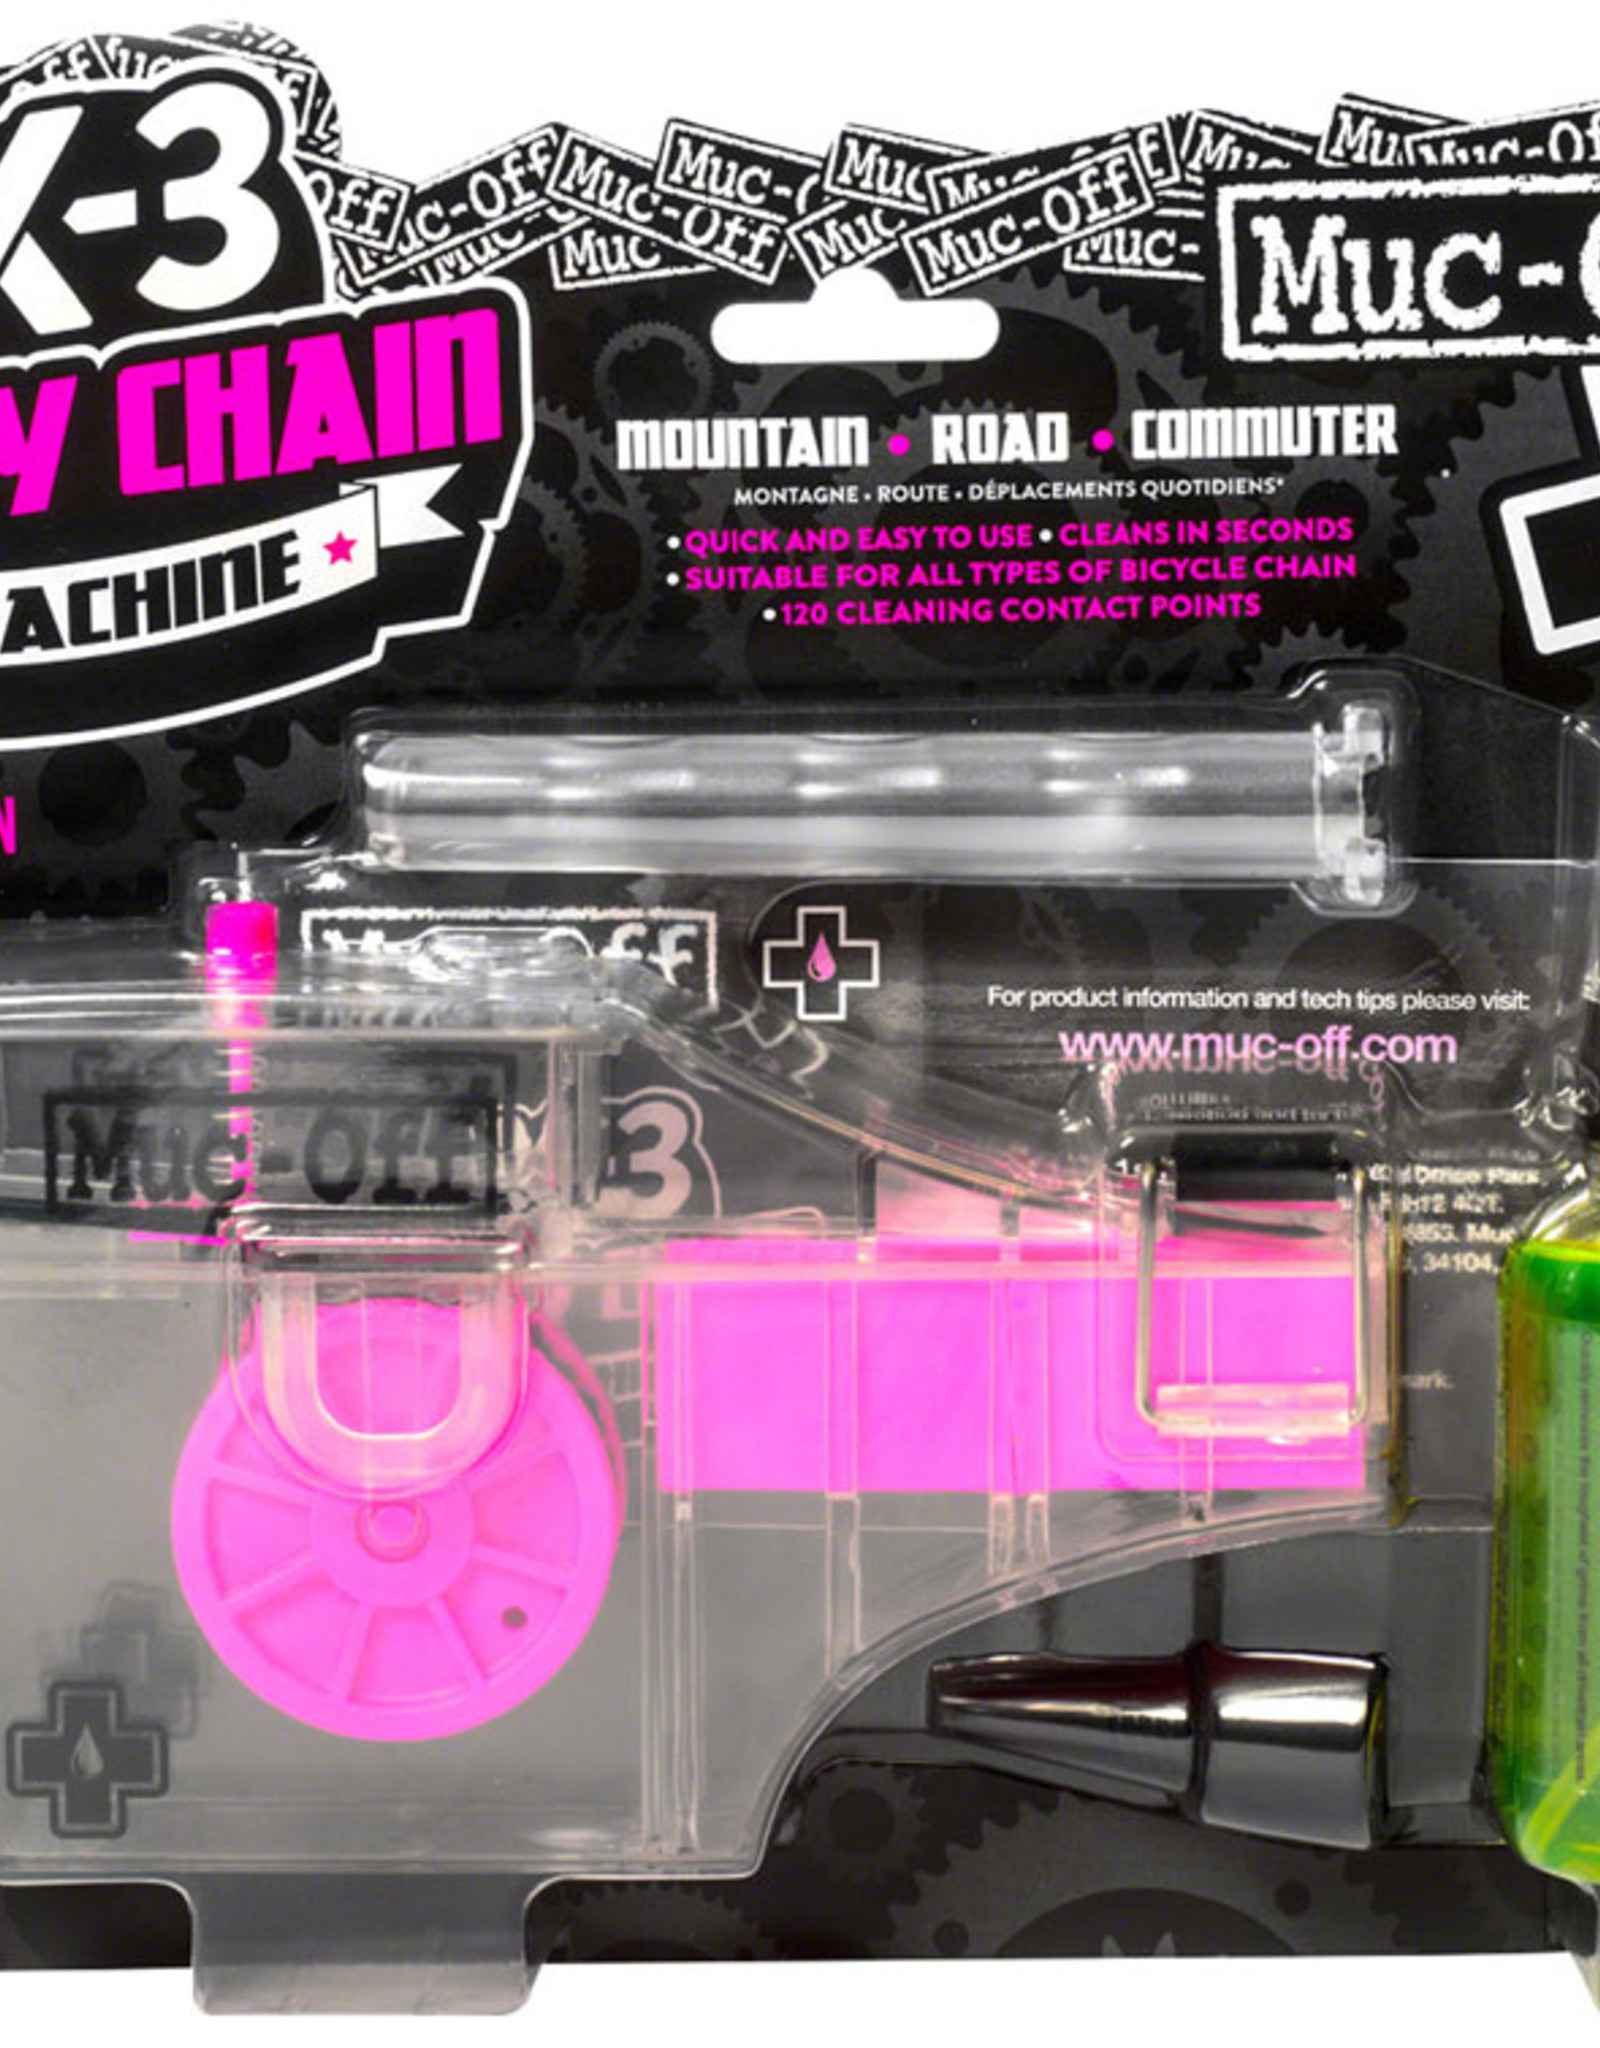 Muc-Off Muc-Off X-3 Dirty Chain Machine Cleaning Kit